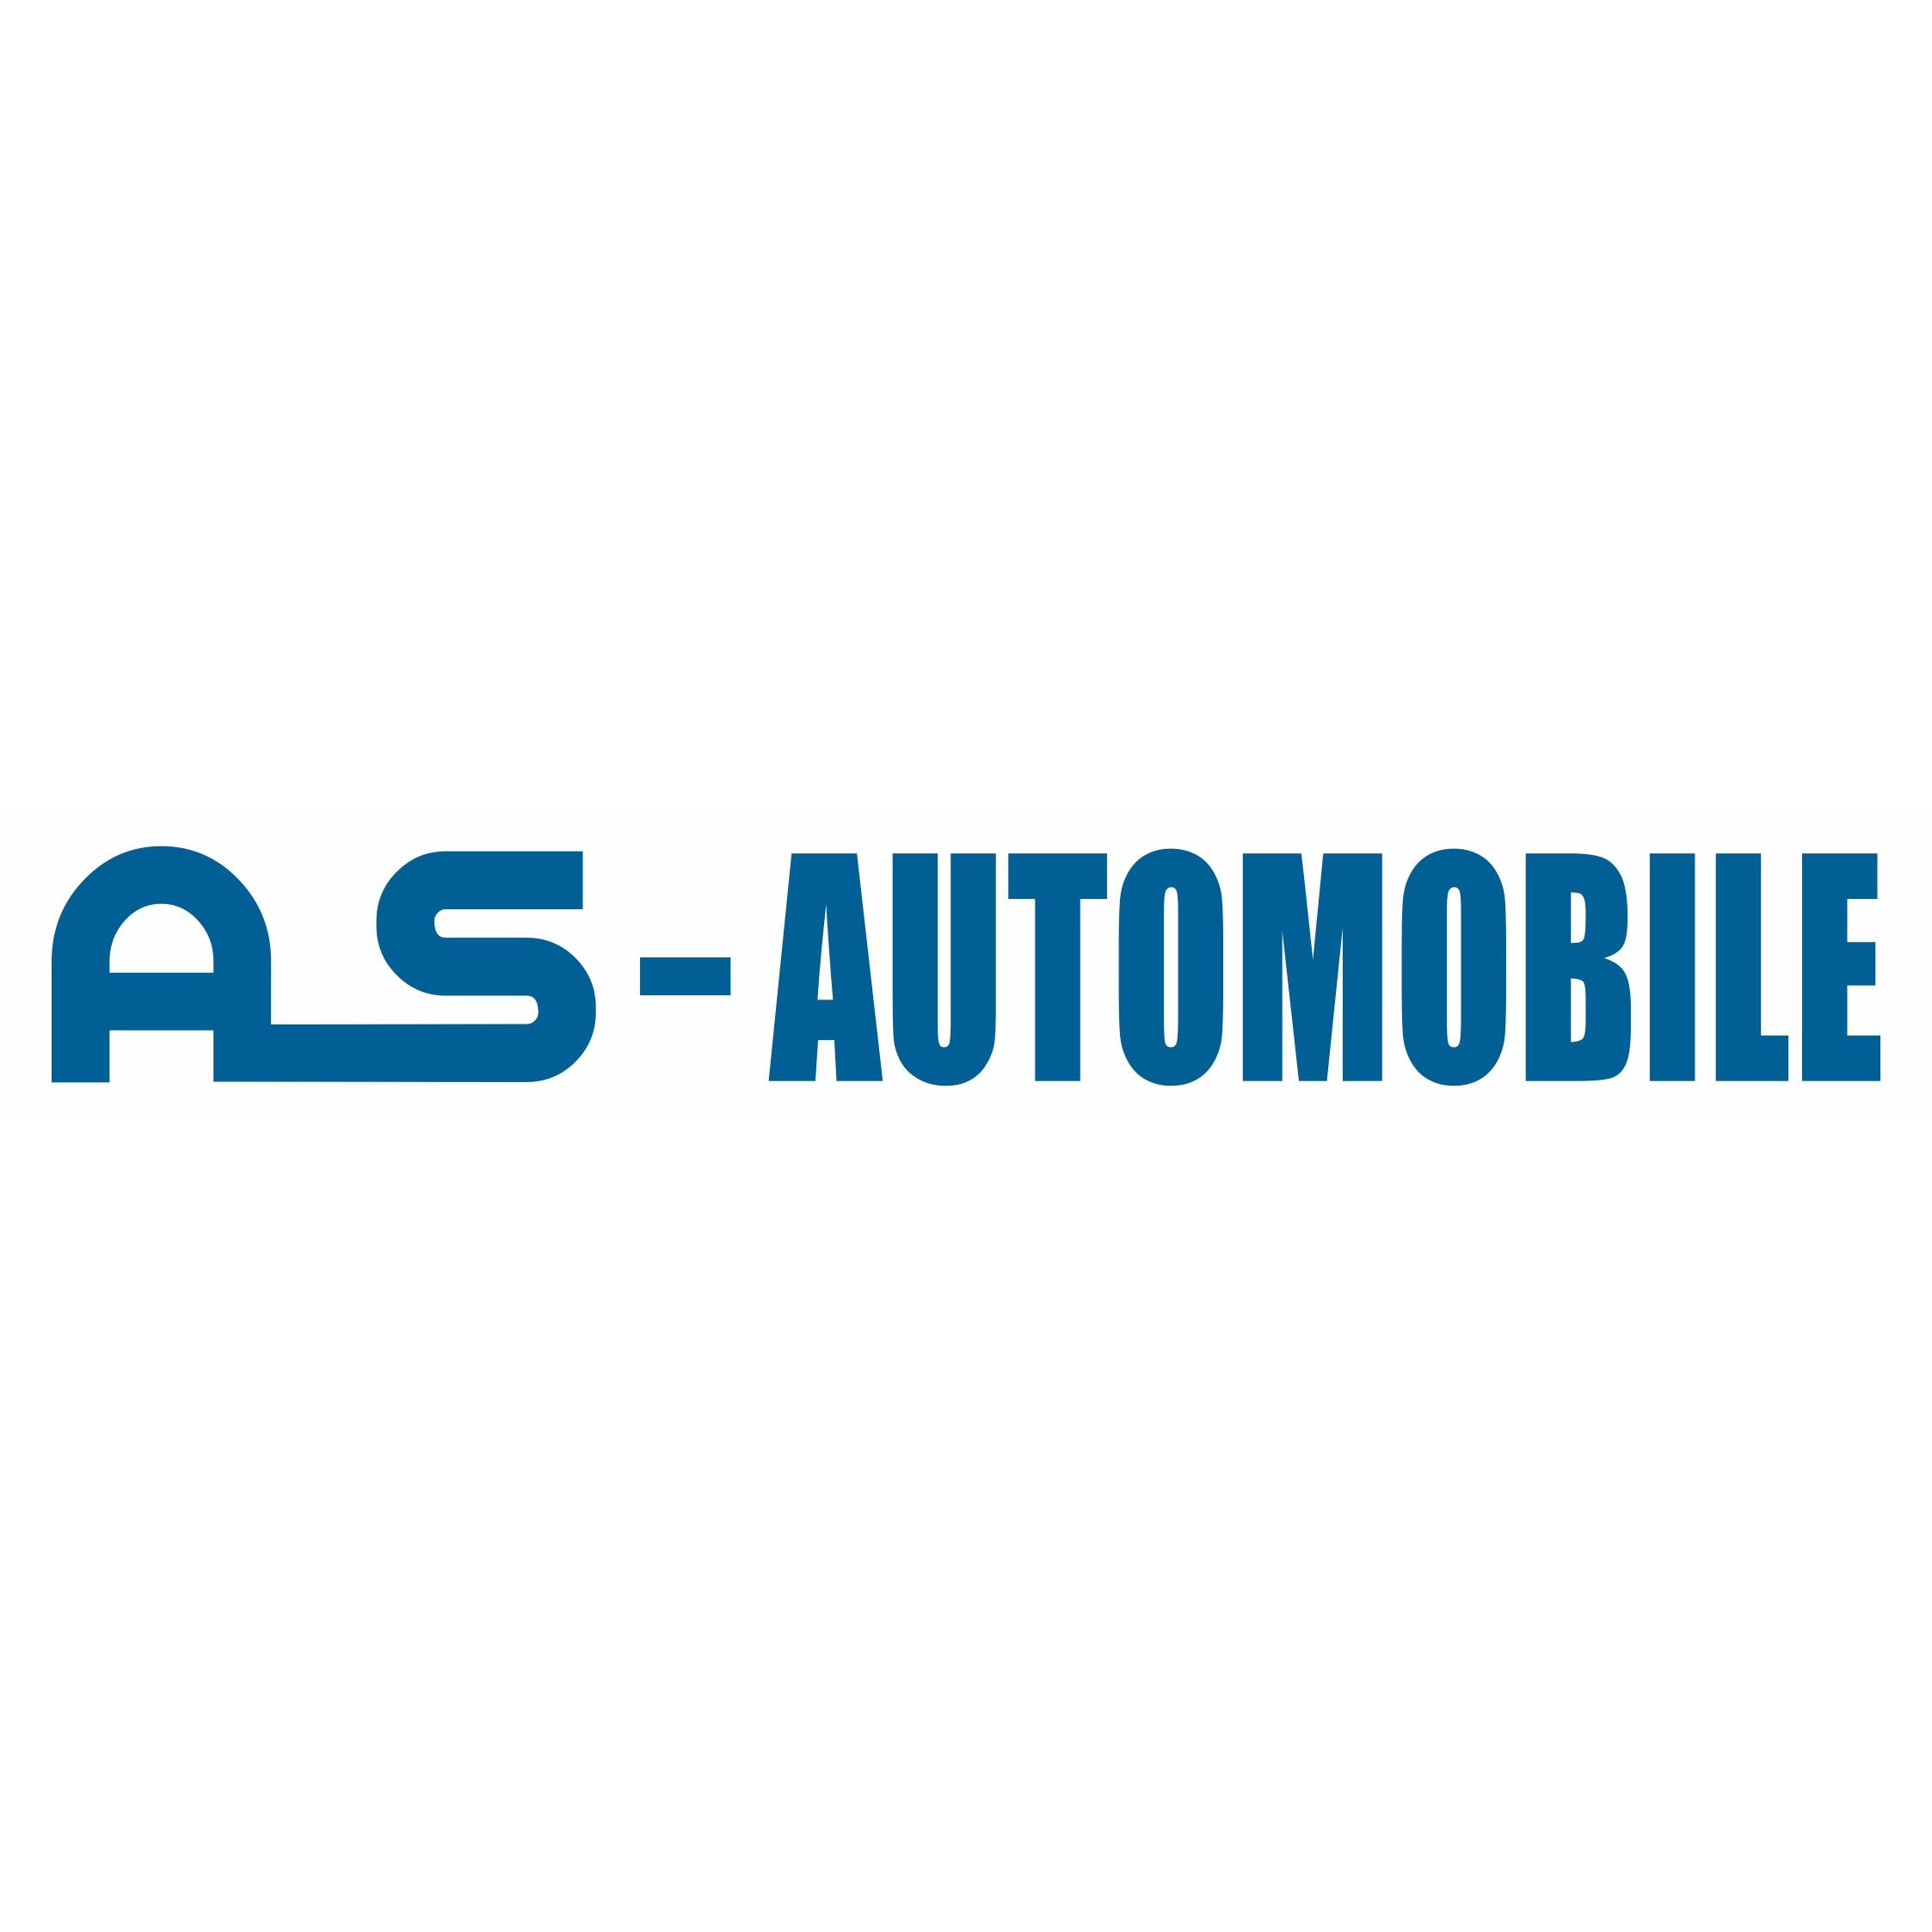 Logo AS Automobile GmbH